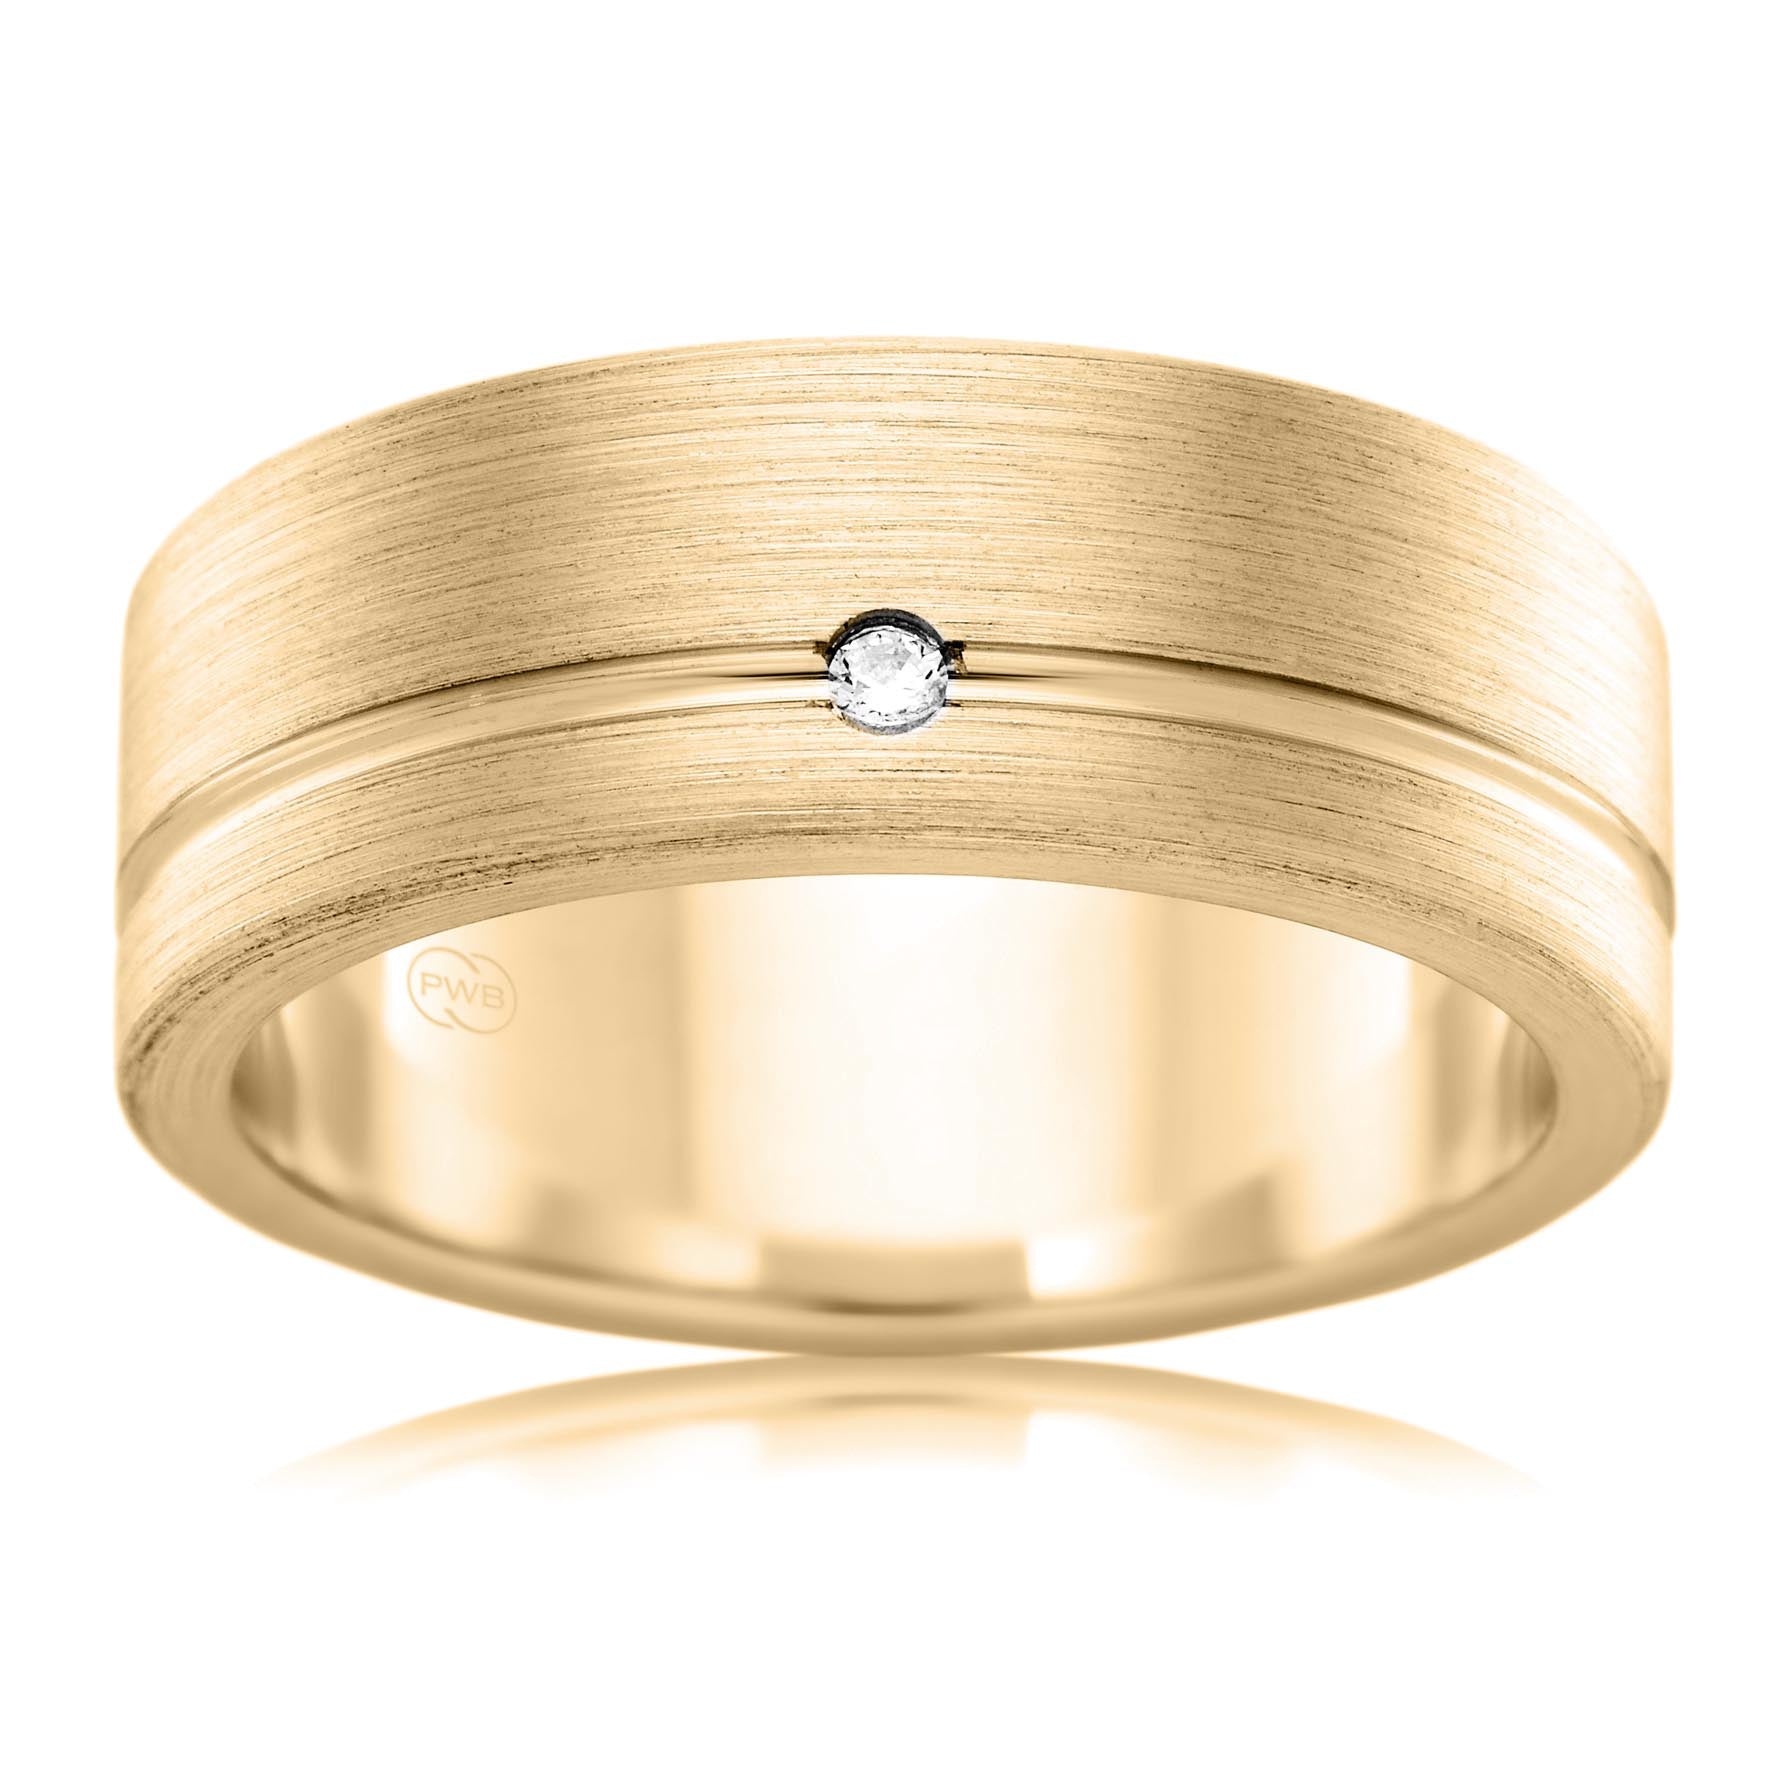 Gents Wedding Ring with 0.02 carat Brilliant-cut Diamond.